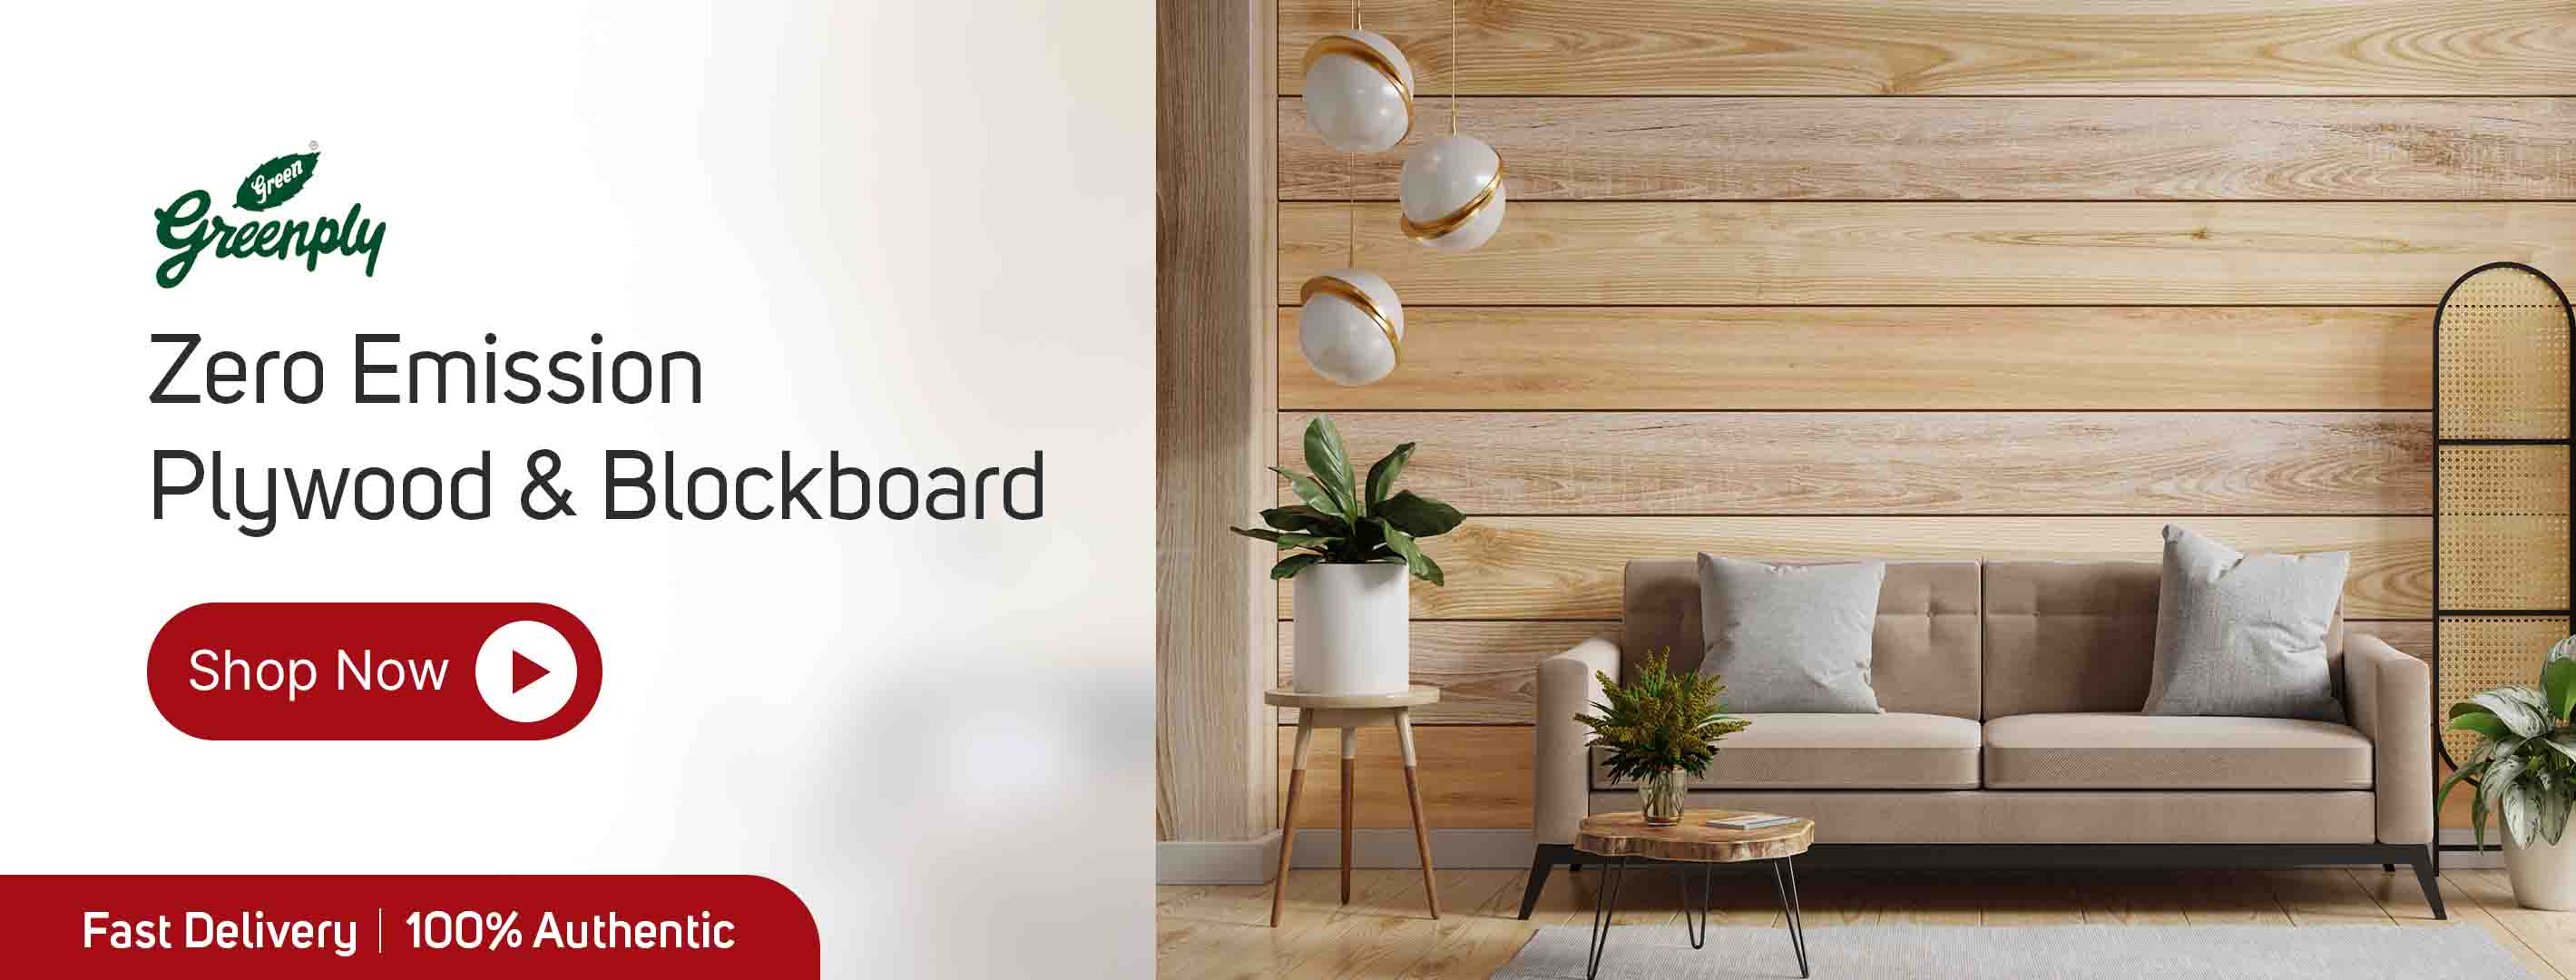 Greenply Plywood & Blockboard